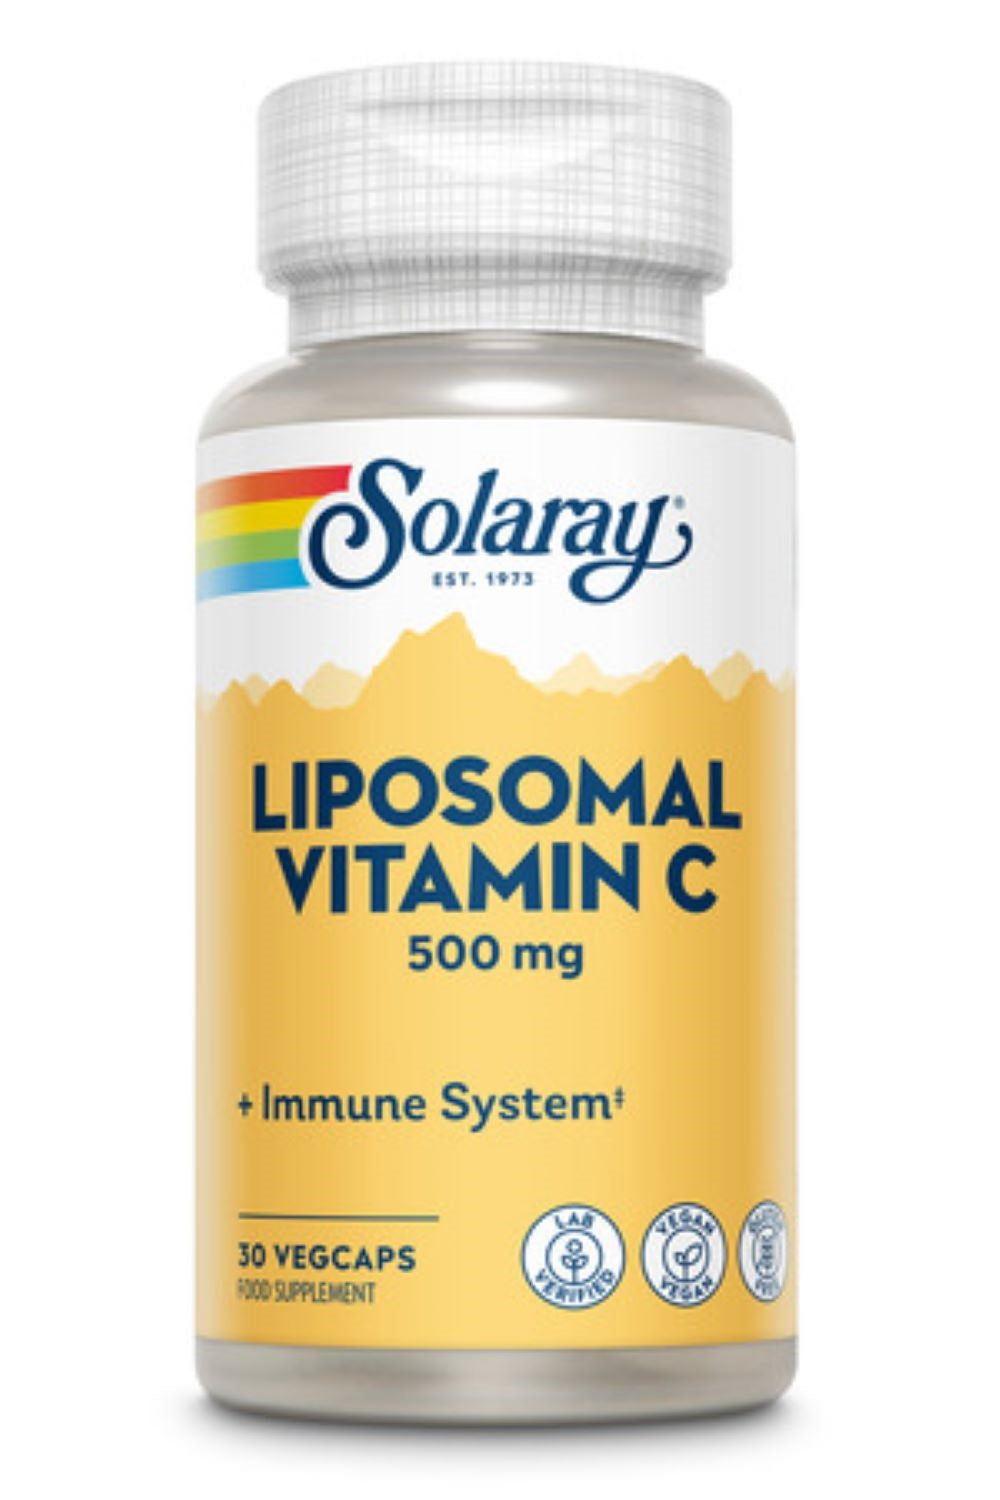 Solaray liposomales Vitamin C – 500 mg, 30 vegetarische Kapseln